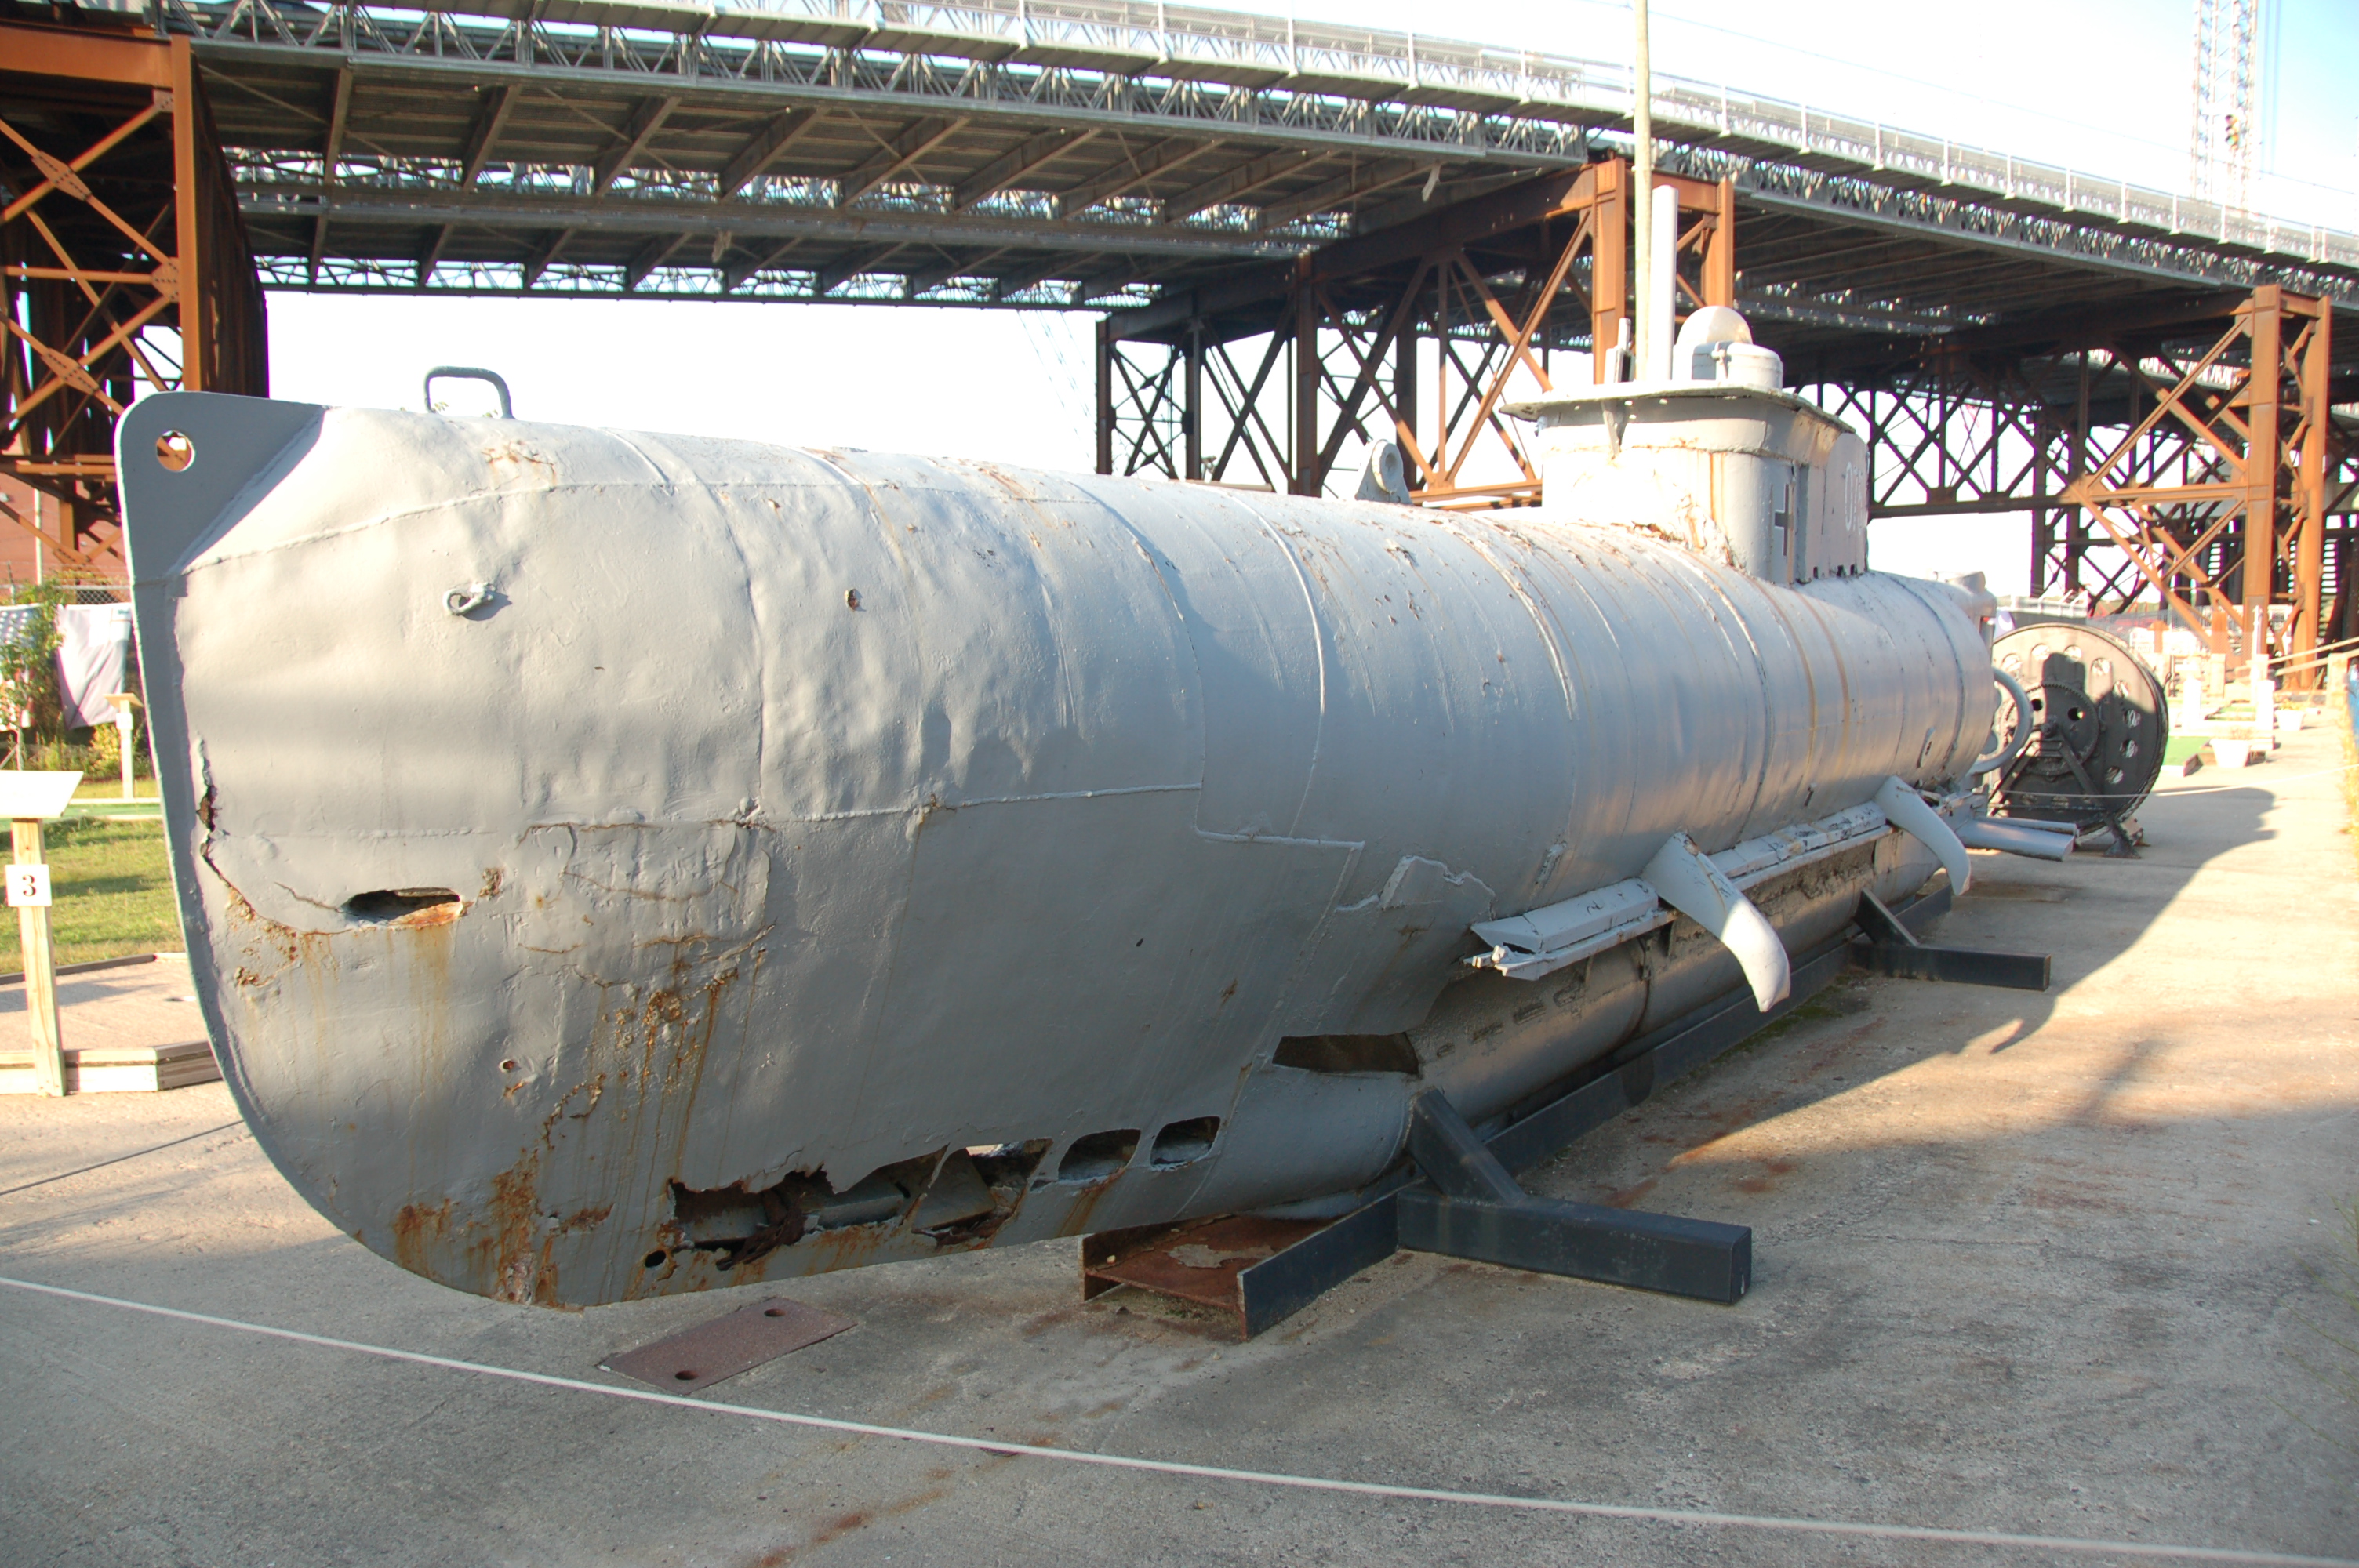 USS Salem park: what appears to be a World War 2 Nazi German miniature submarine